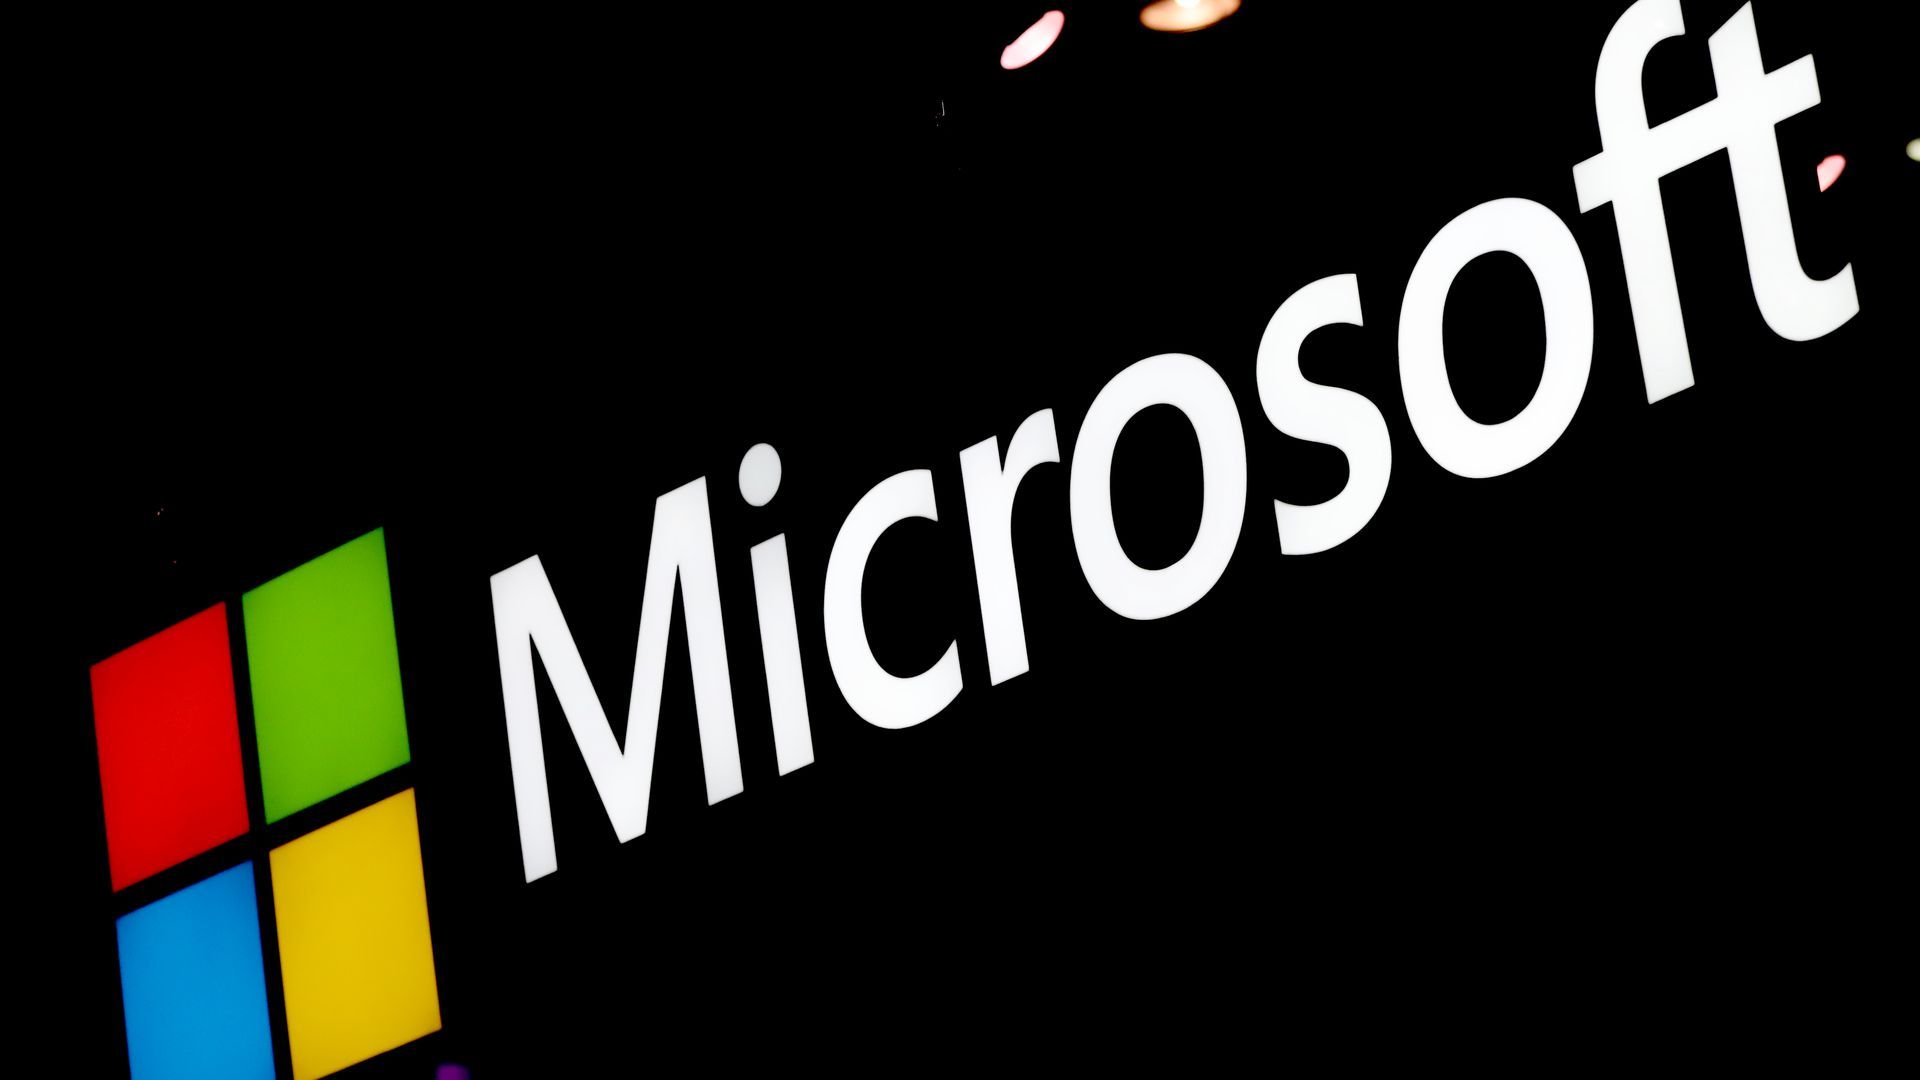 A Microsoft logo shown at an angle